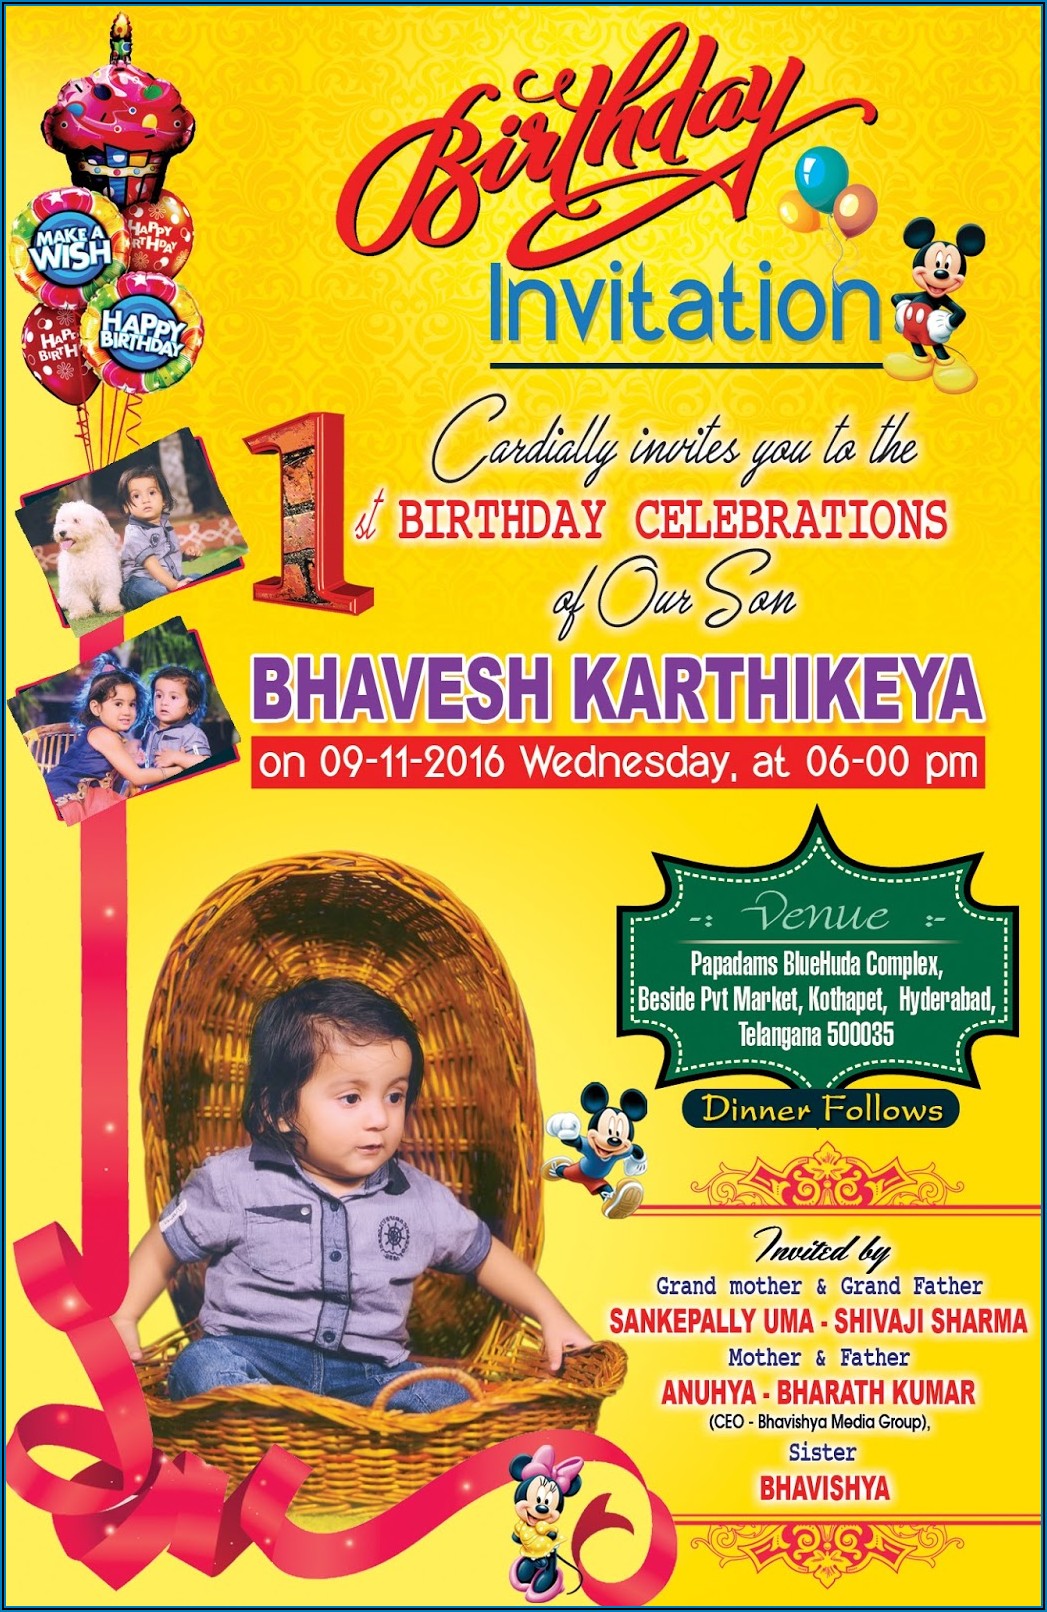 Baby Girl First Birthday Invitation Card Online Free